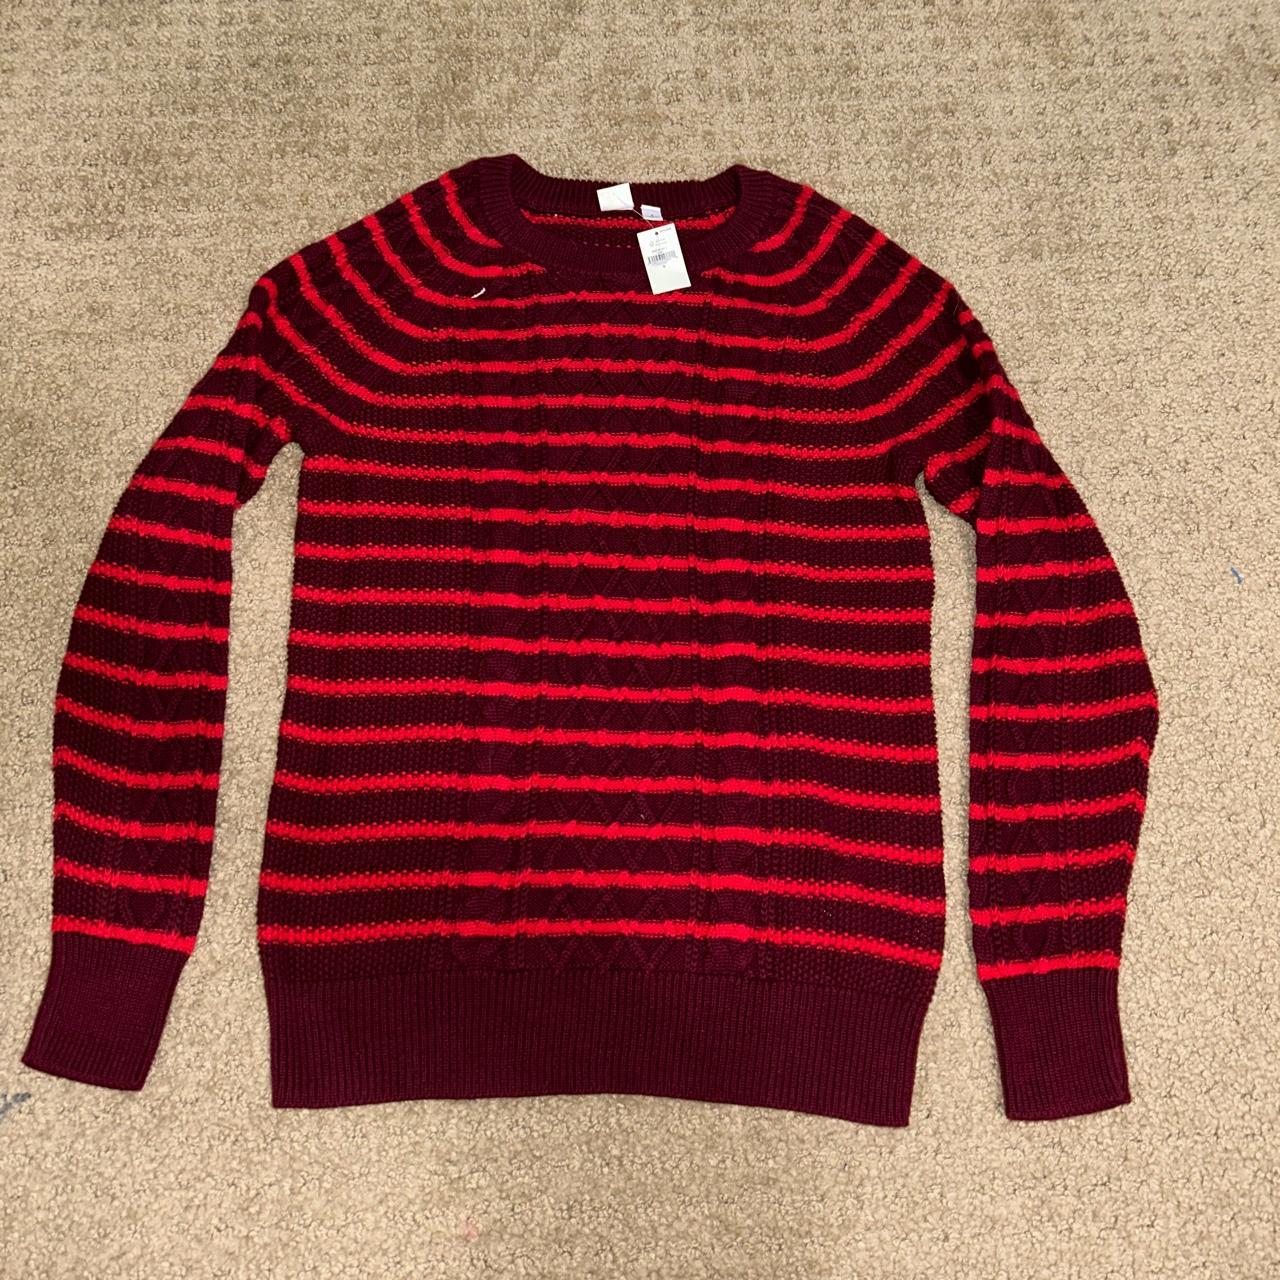 Striped GAP Red Sweater BRAND NEW Size S not worn,... - Depop